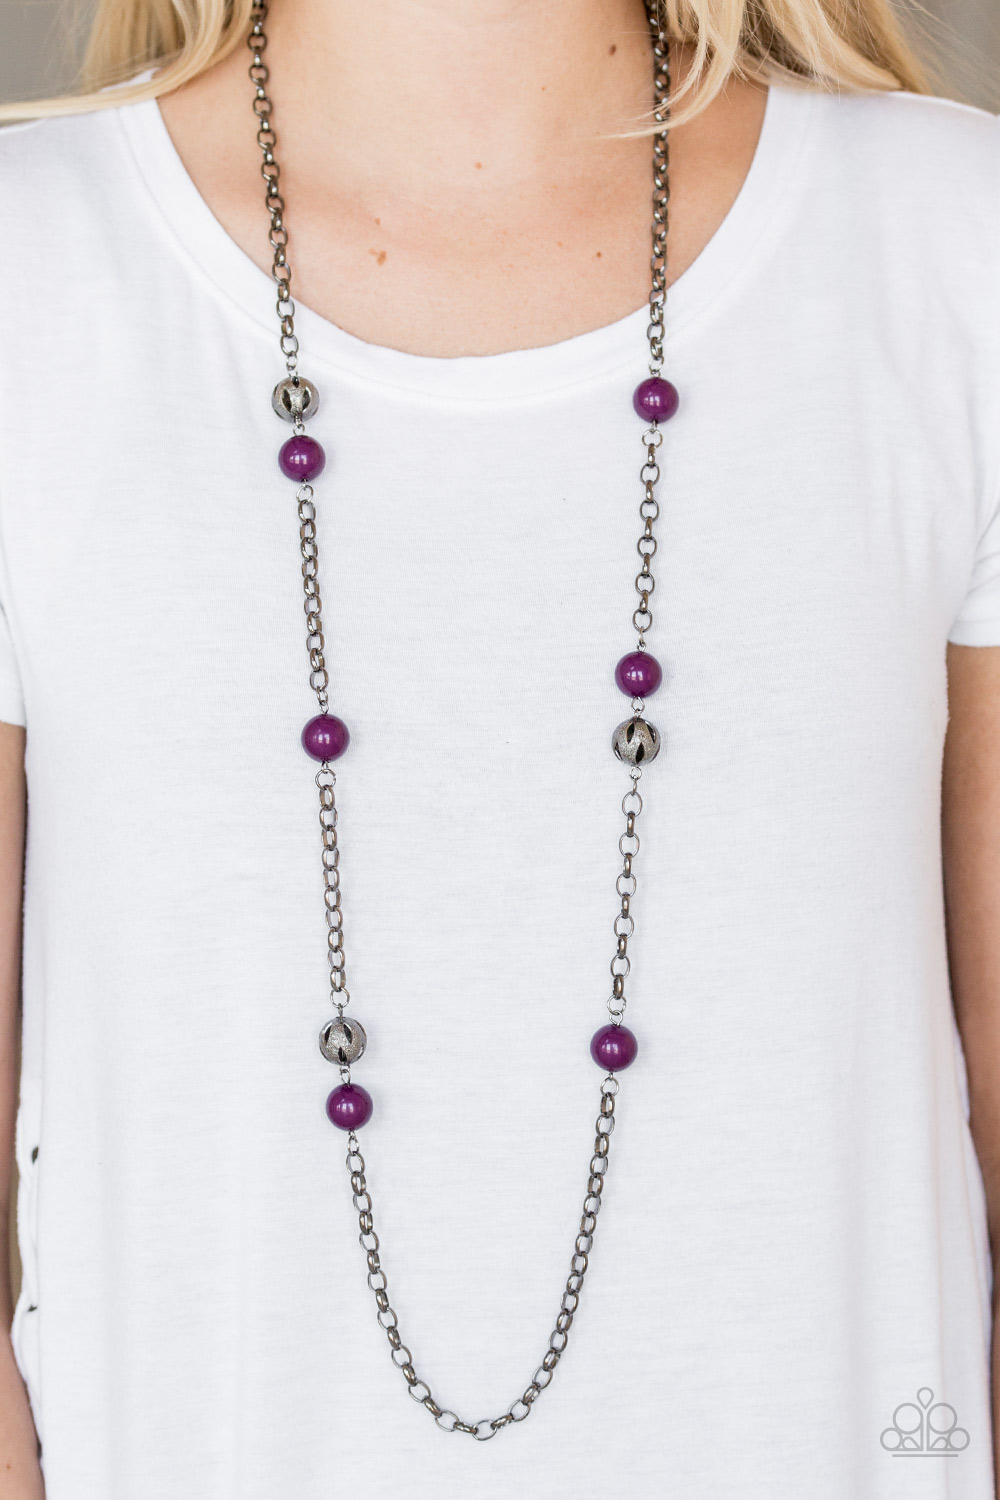 Palm Beach Beauty Purple Necklace – Ericka C Wise, $5 Jewelry